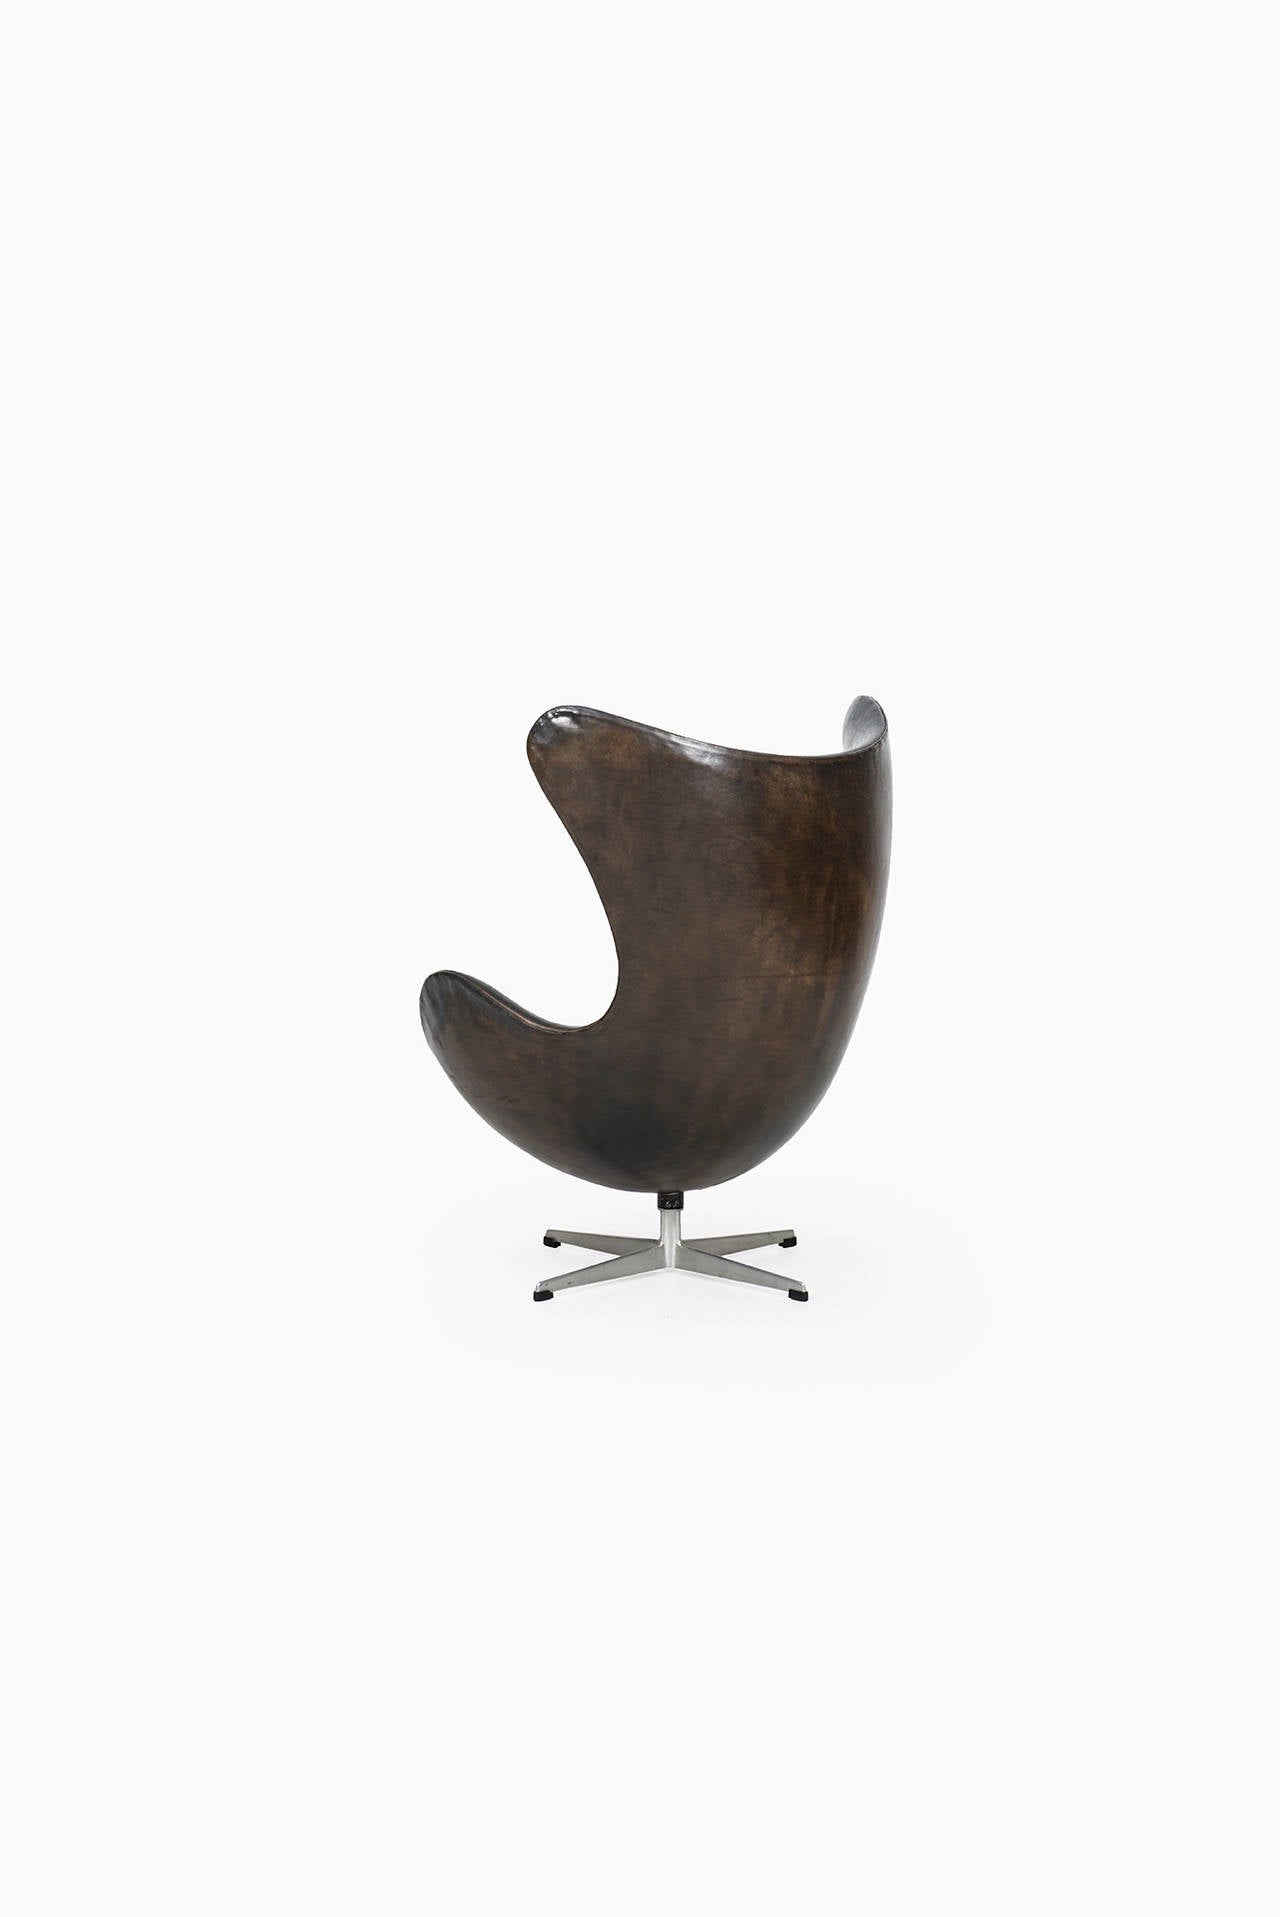 Aluminum Arne Jacobsen Early Egg Chair in Original Black Leather by Fritz Hansen